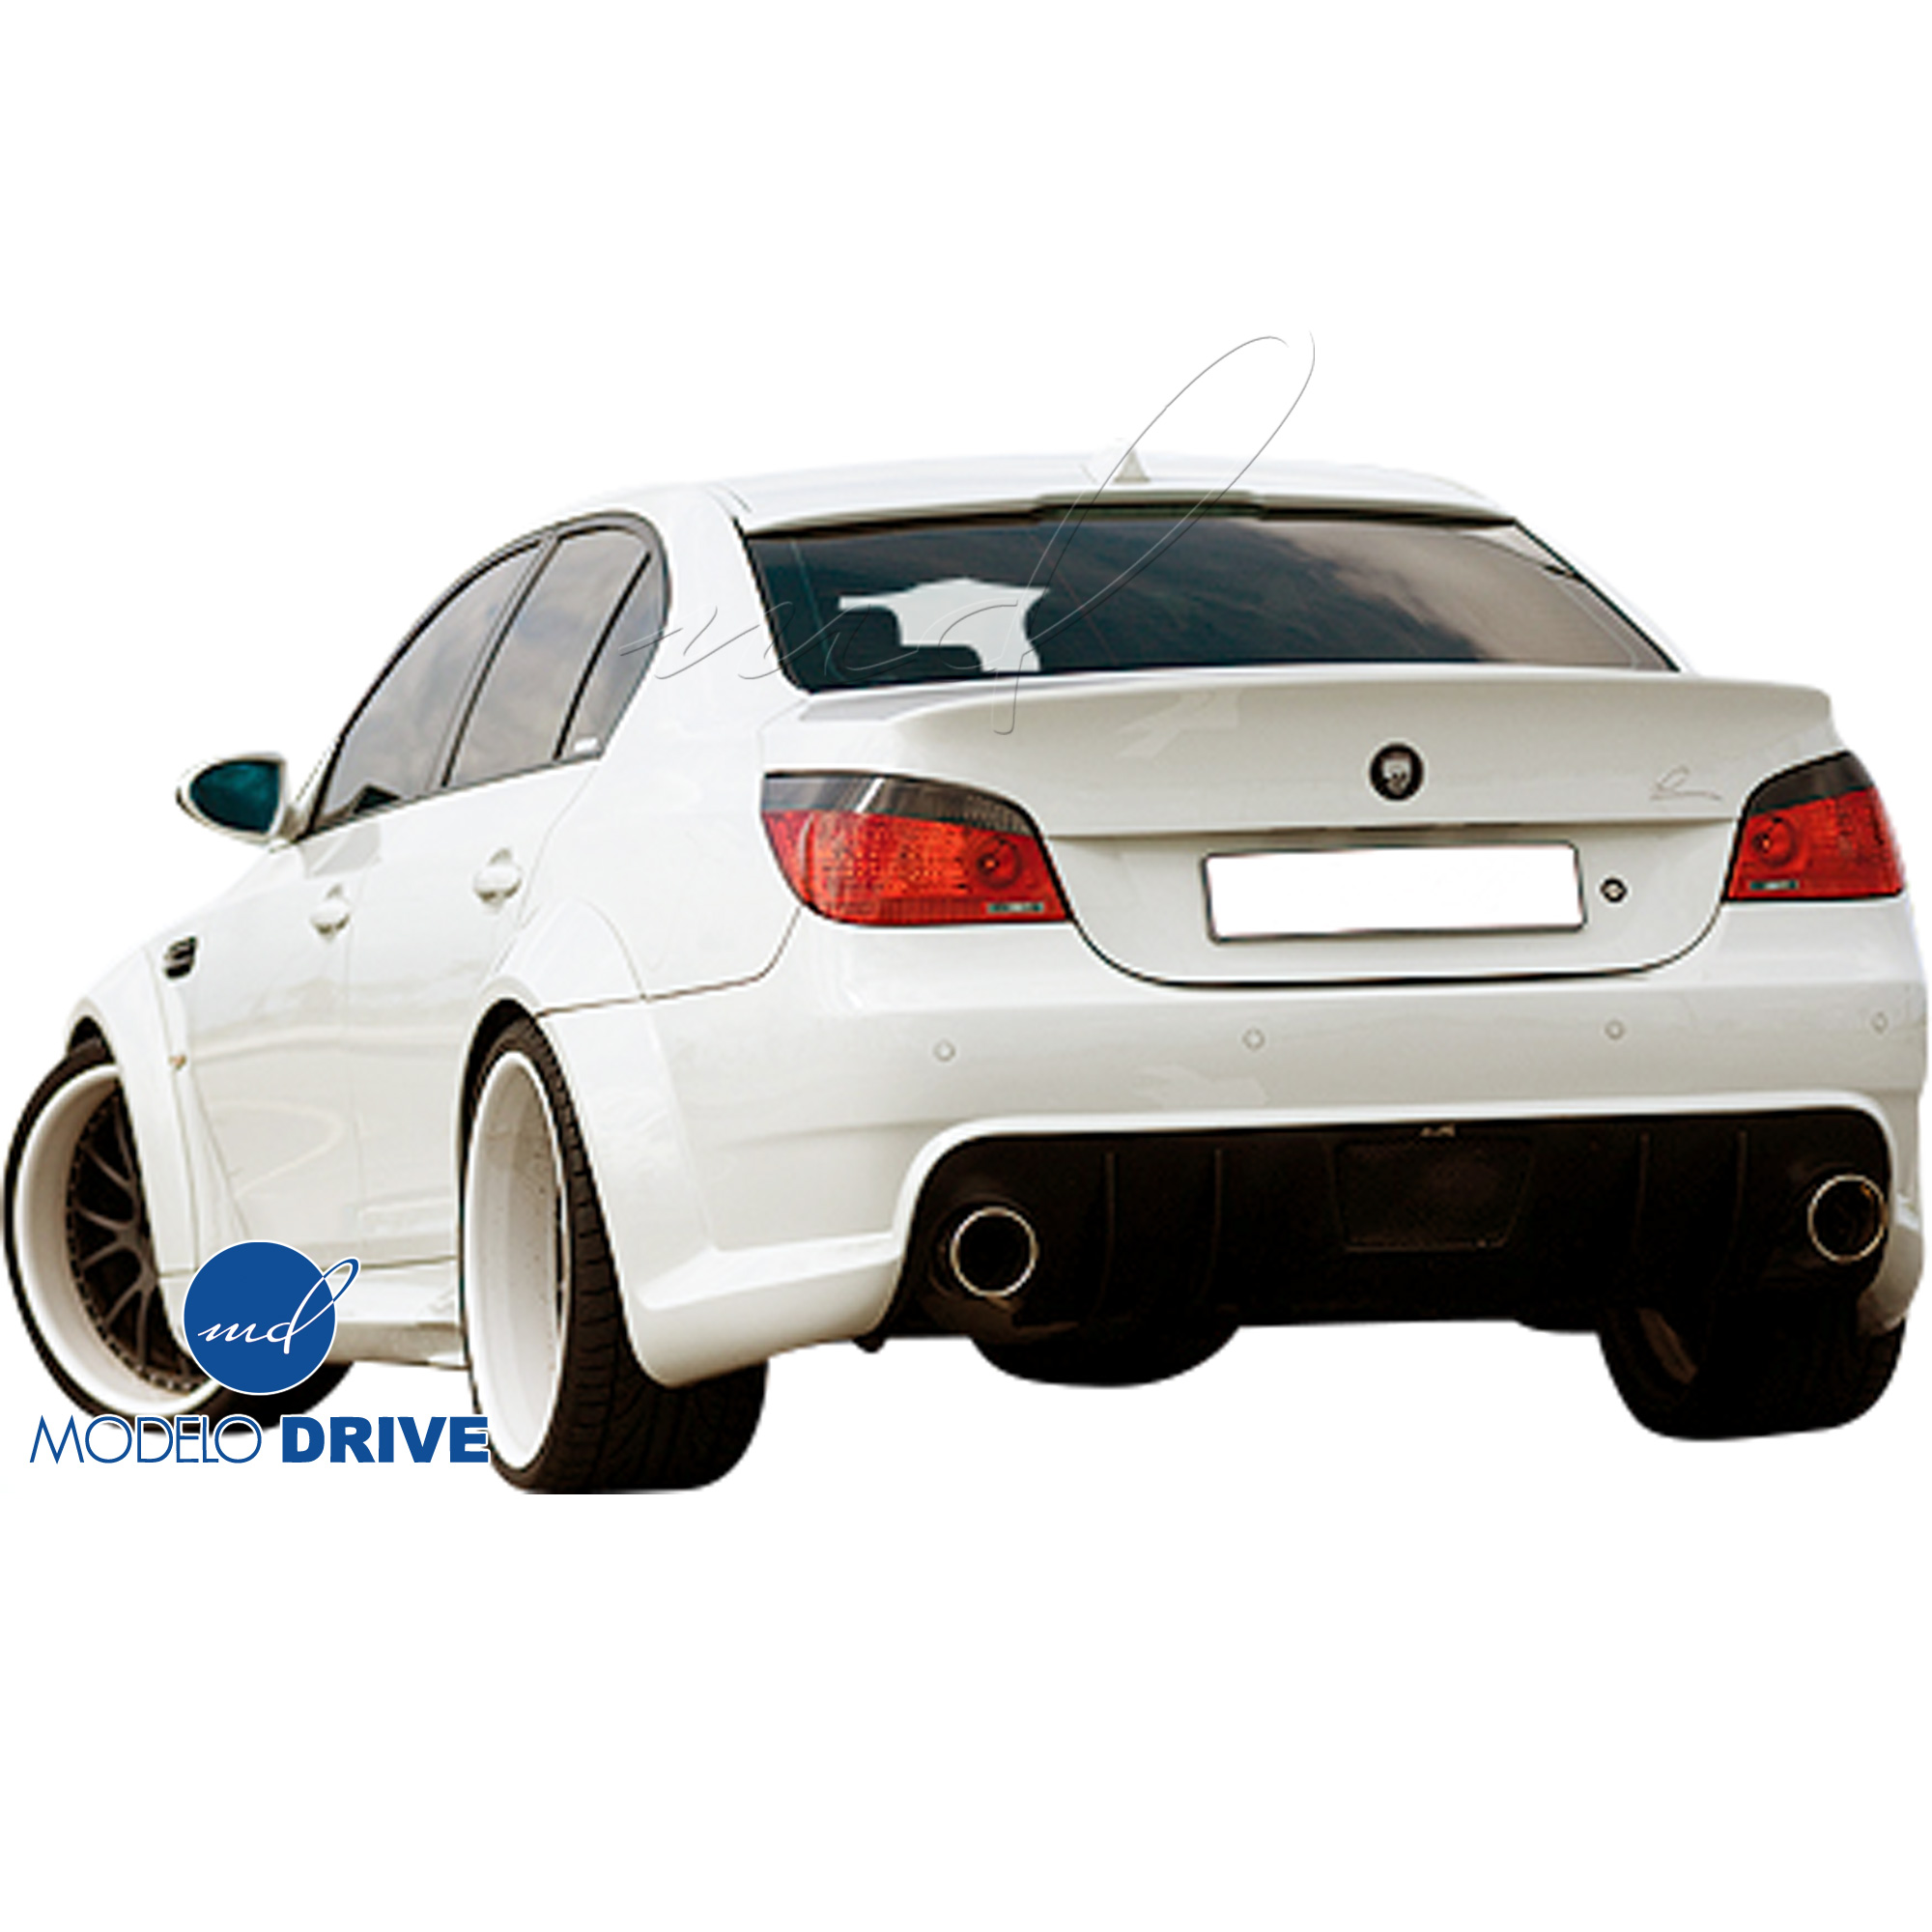 ModeloDrive FRP LUMM CL5RS Wide Body Rear Bumper > BMW 5-Series E60 2004-2010 > 4dr - Image 10